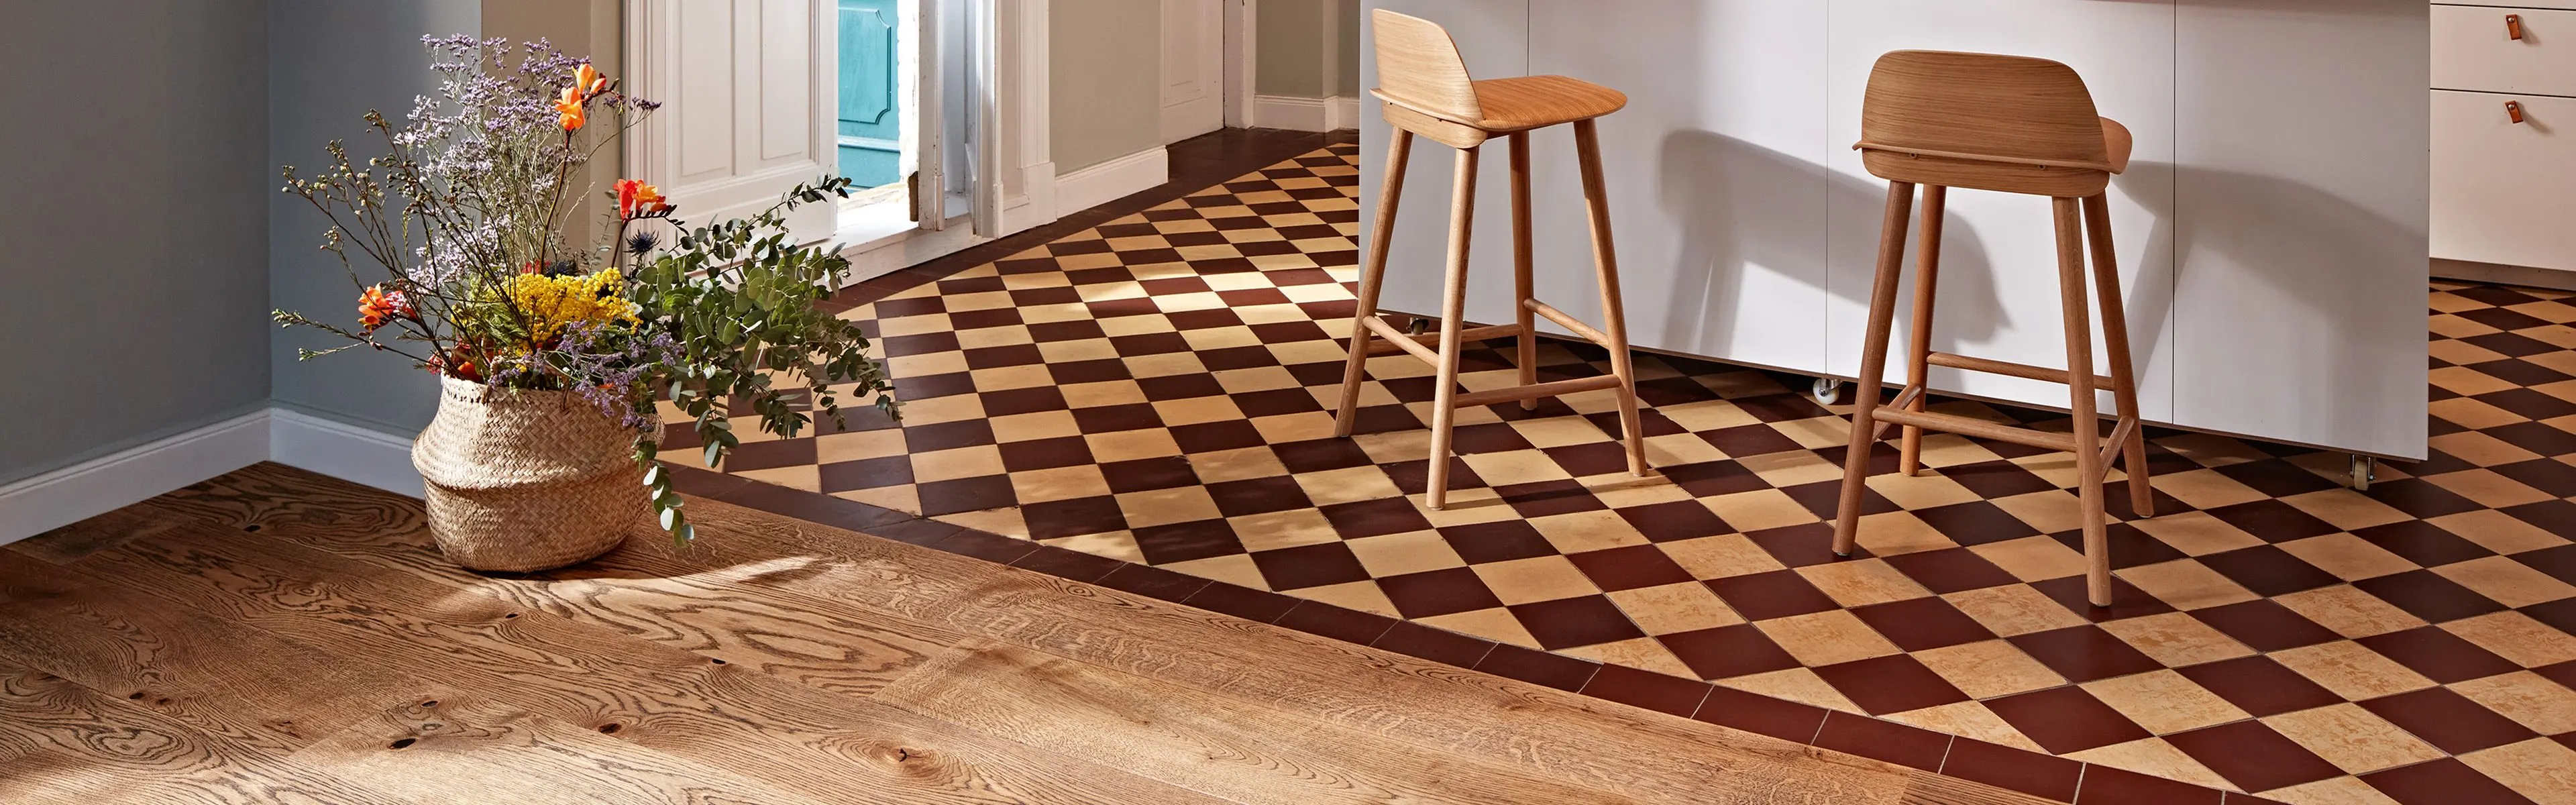 Stue og kjøkken med tregulv i enstavsparkett kombinert med gulv i hollandsk mønster.